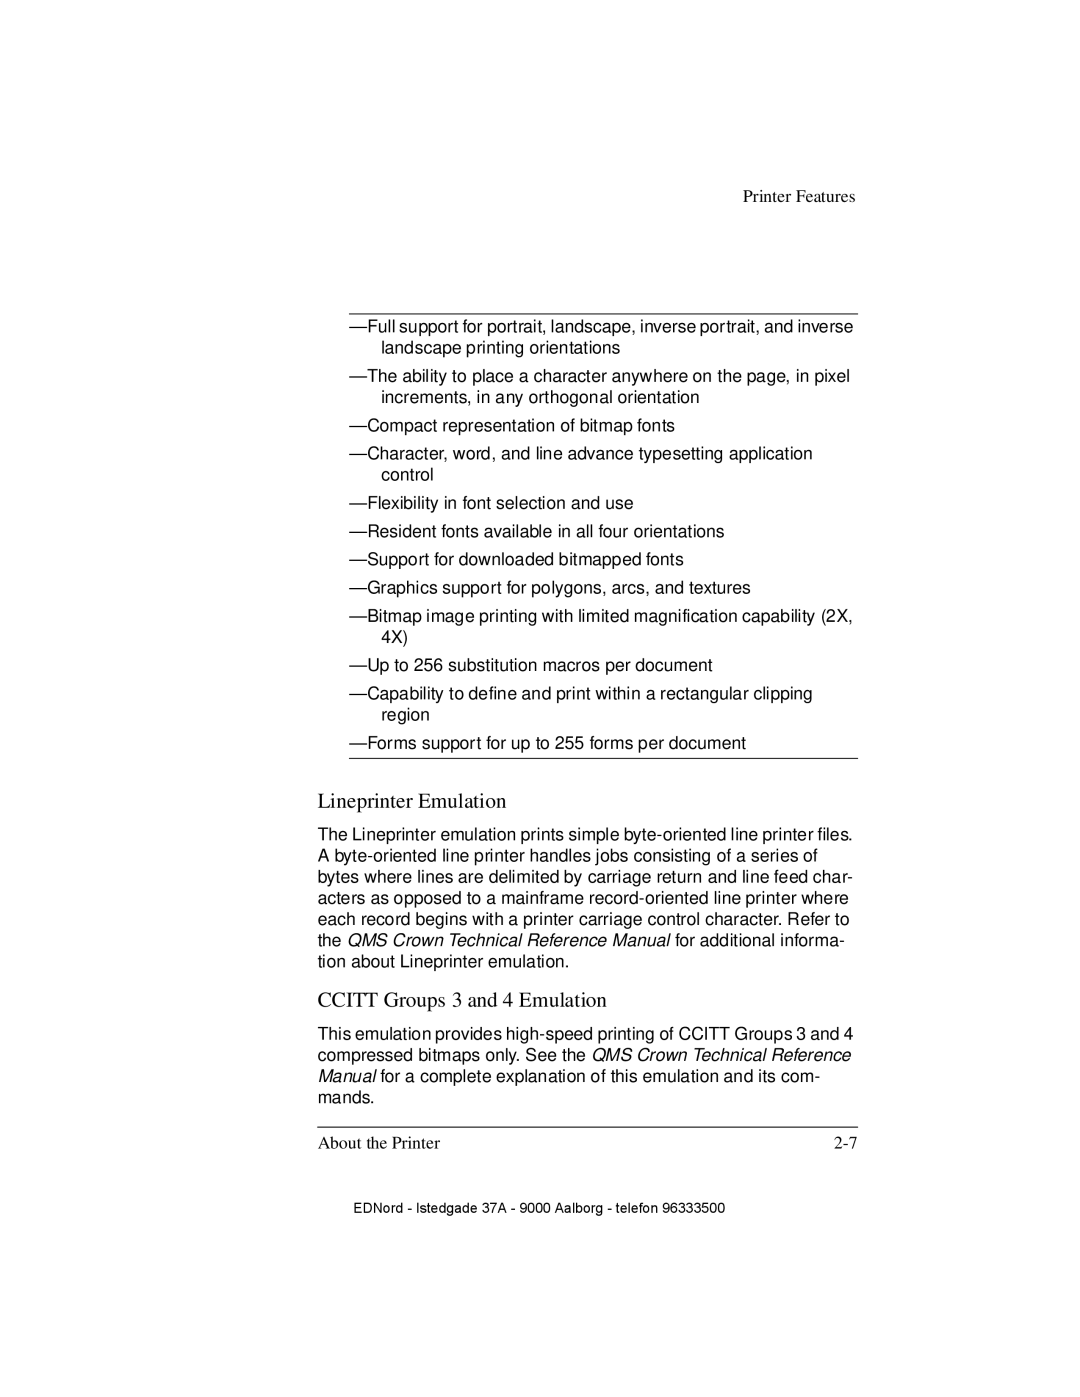 IBM QMS 4525 manual Lineprinter Emulation, CCITT Groups 3 and 4 Emulation 